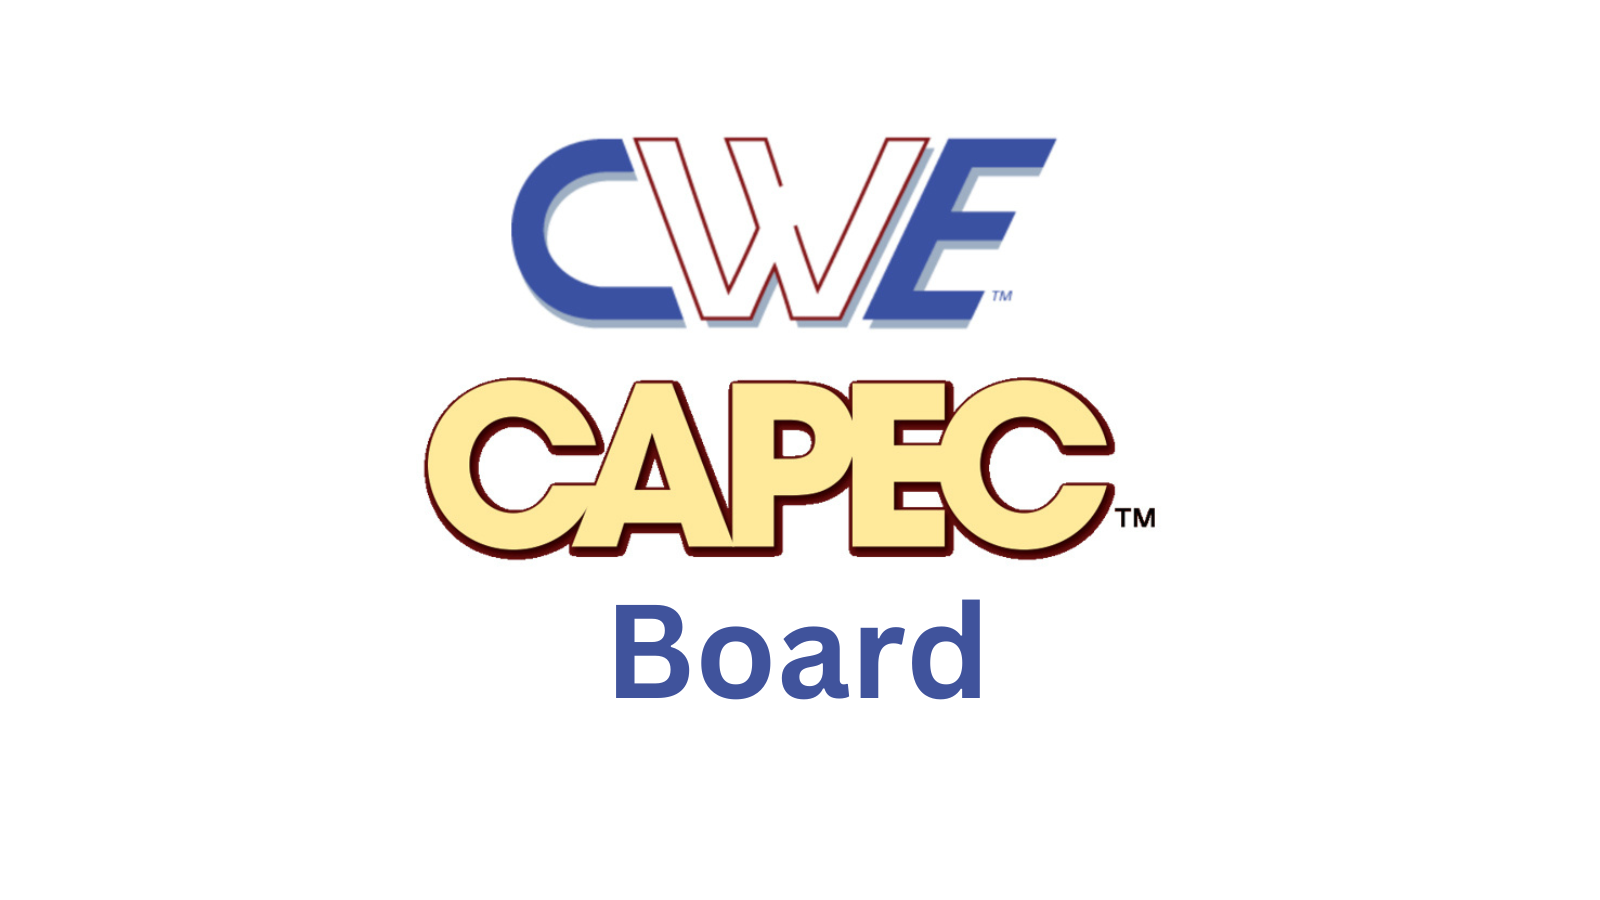 CWE/CAPEC Board